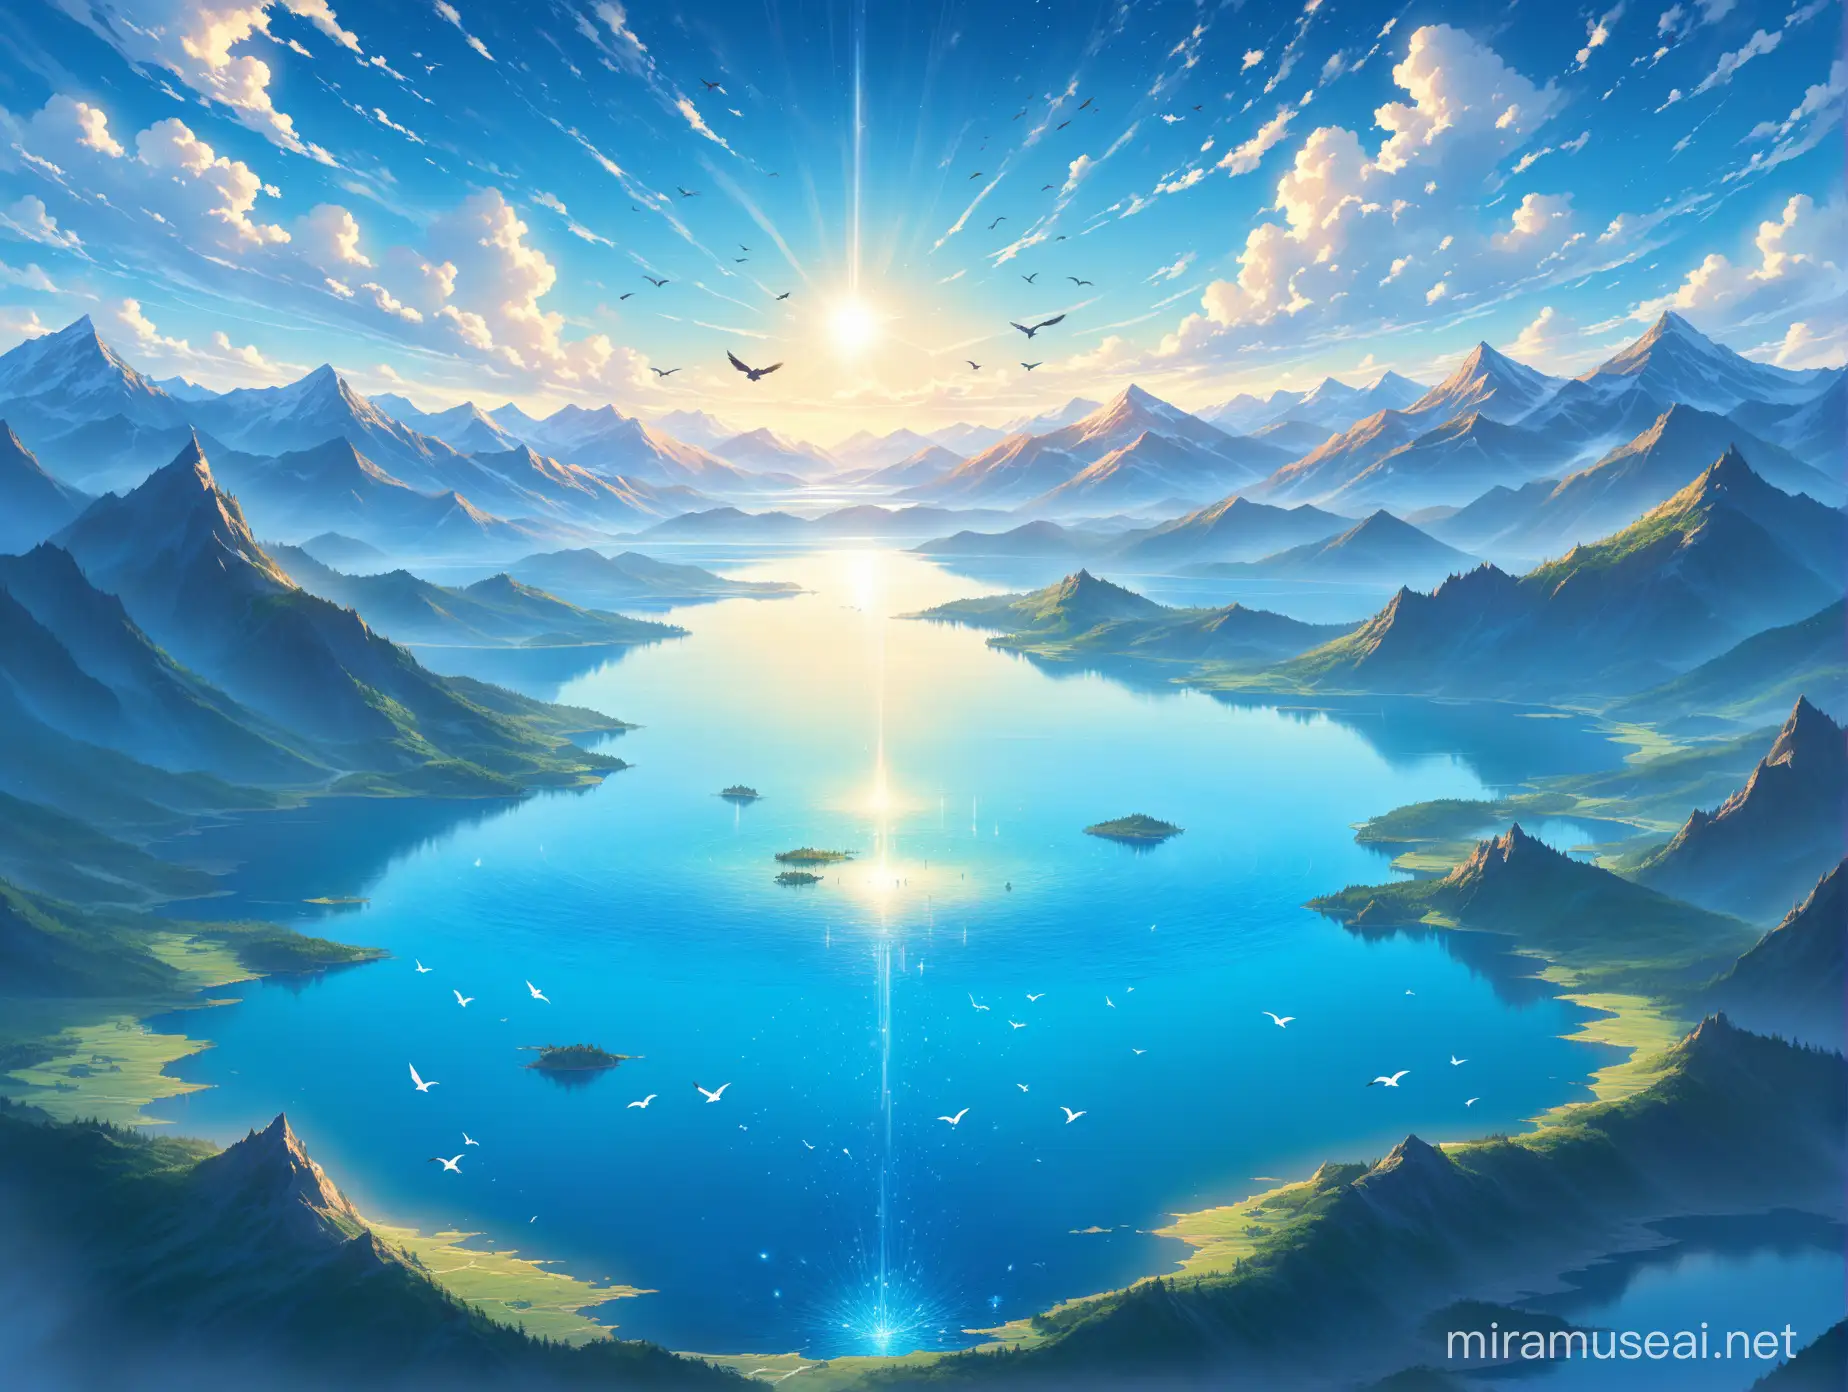 Giant Blue Fantasy Lake with Mountainous Horizon and Birds in Sunlit Sky